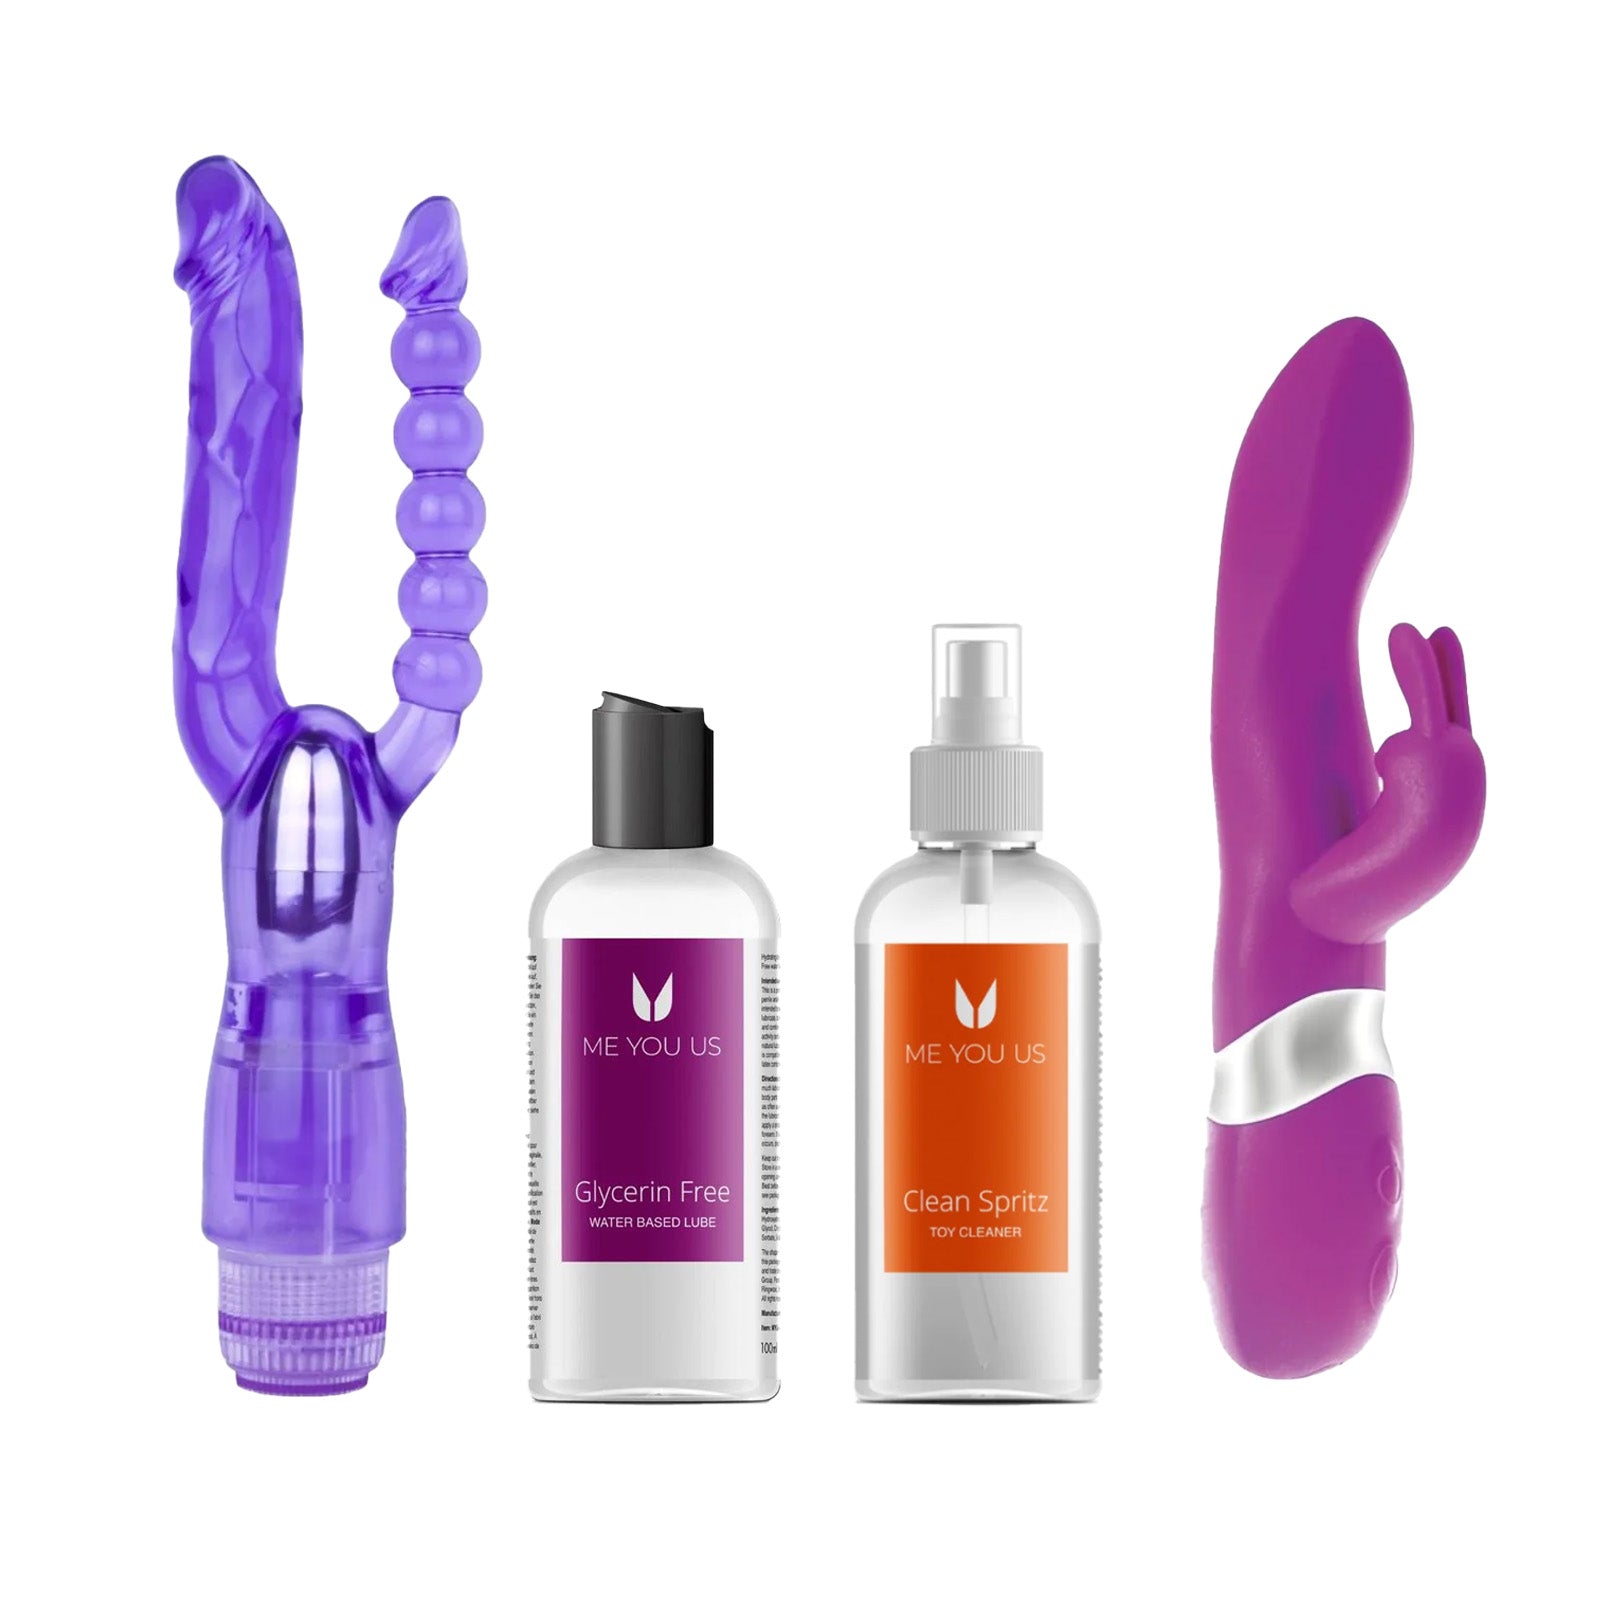 The Women's Double Pleasure Kit